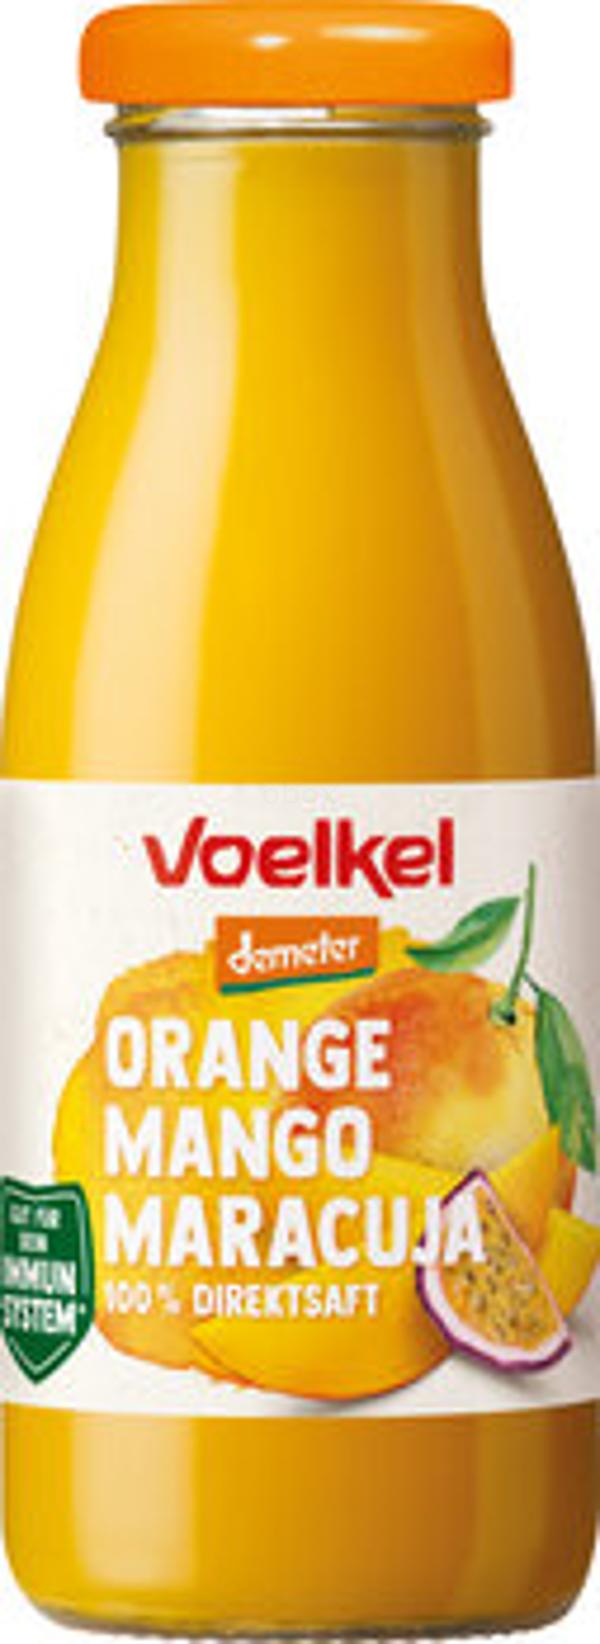 Produktfoto zu Saft Orange Mango Maracuja 0,25L